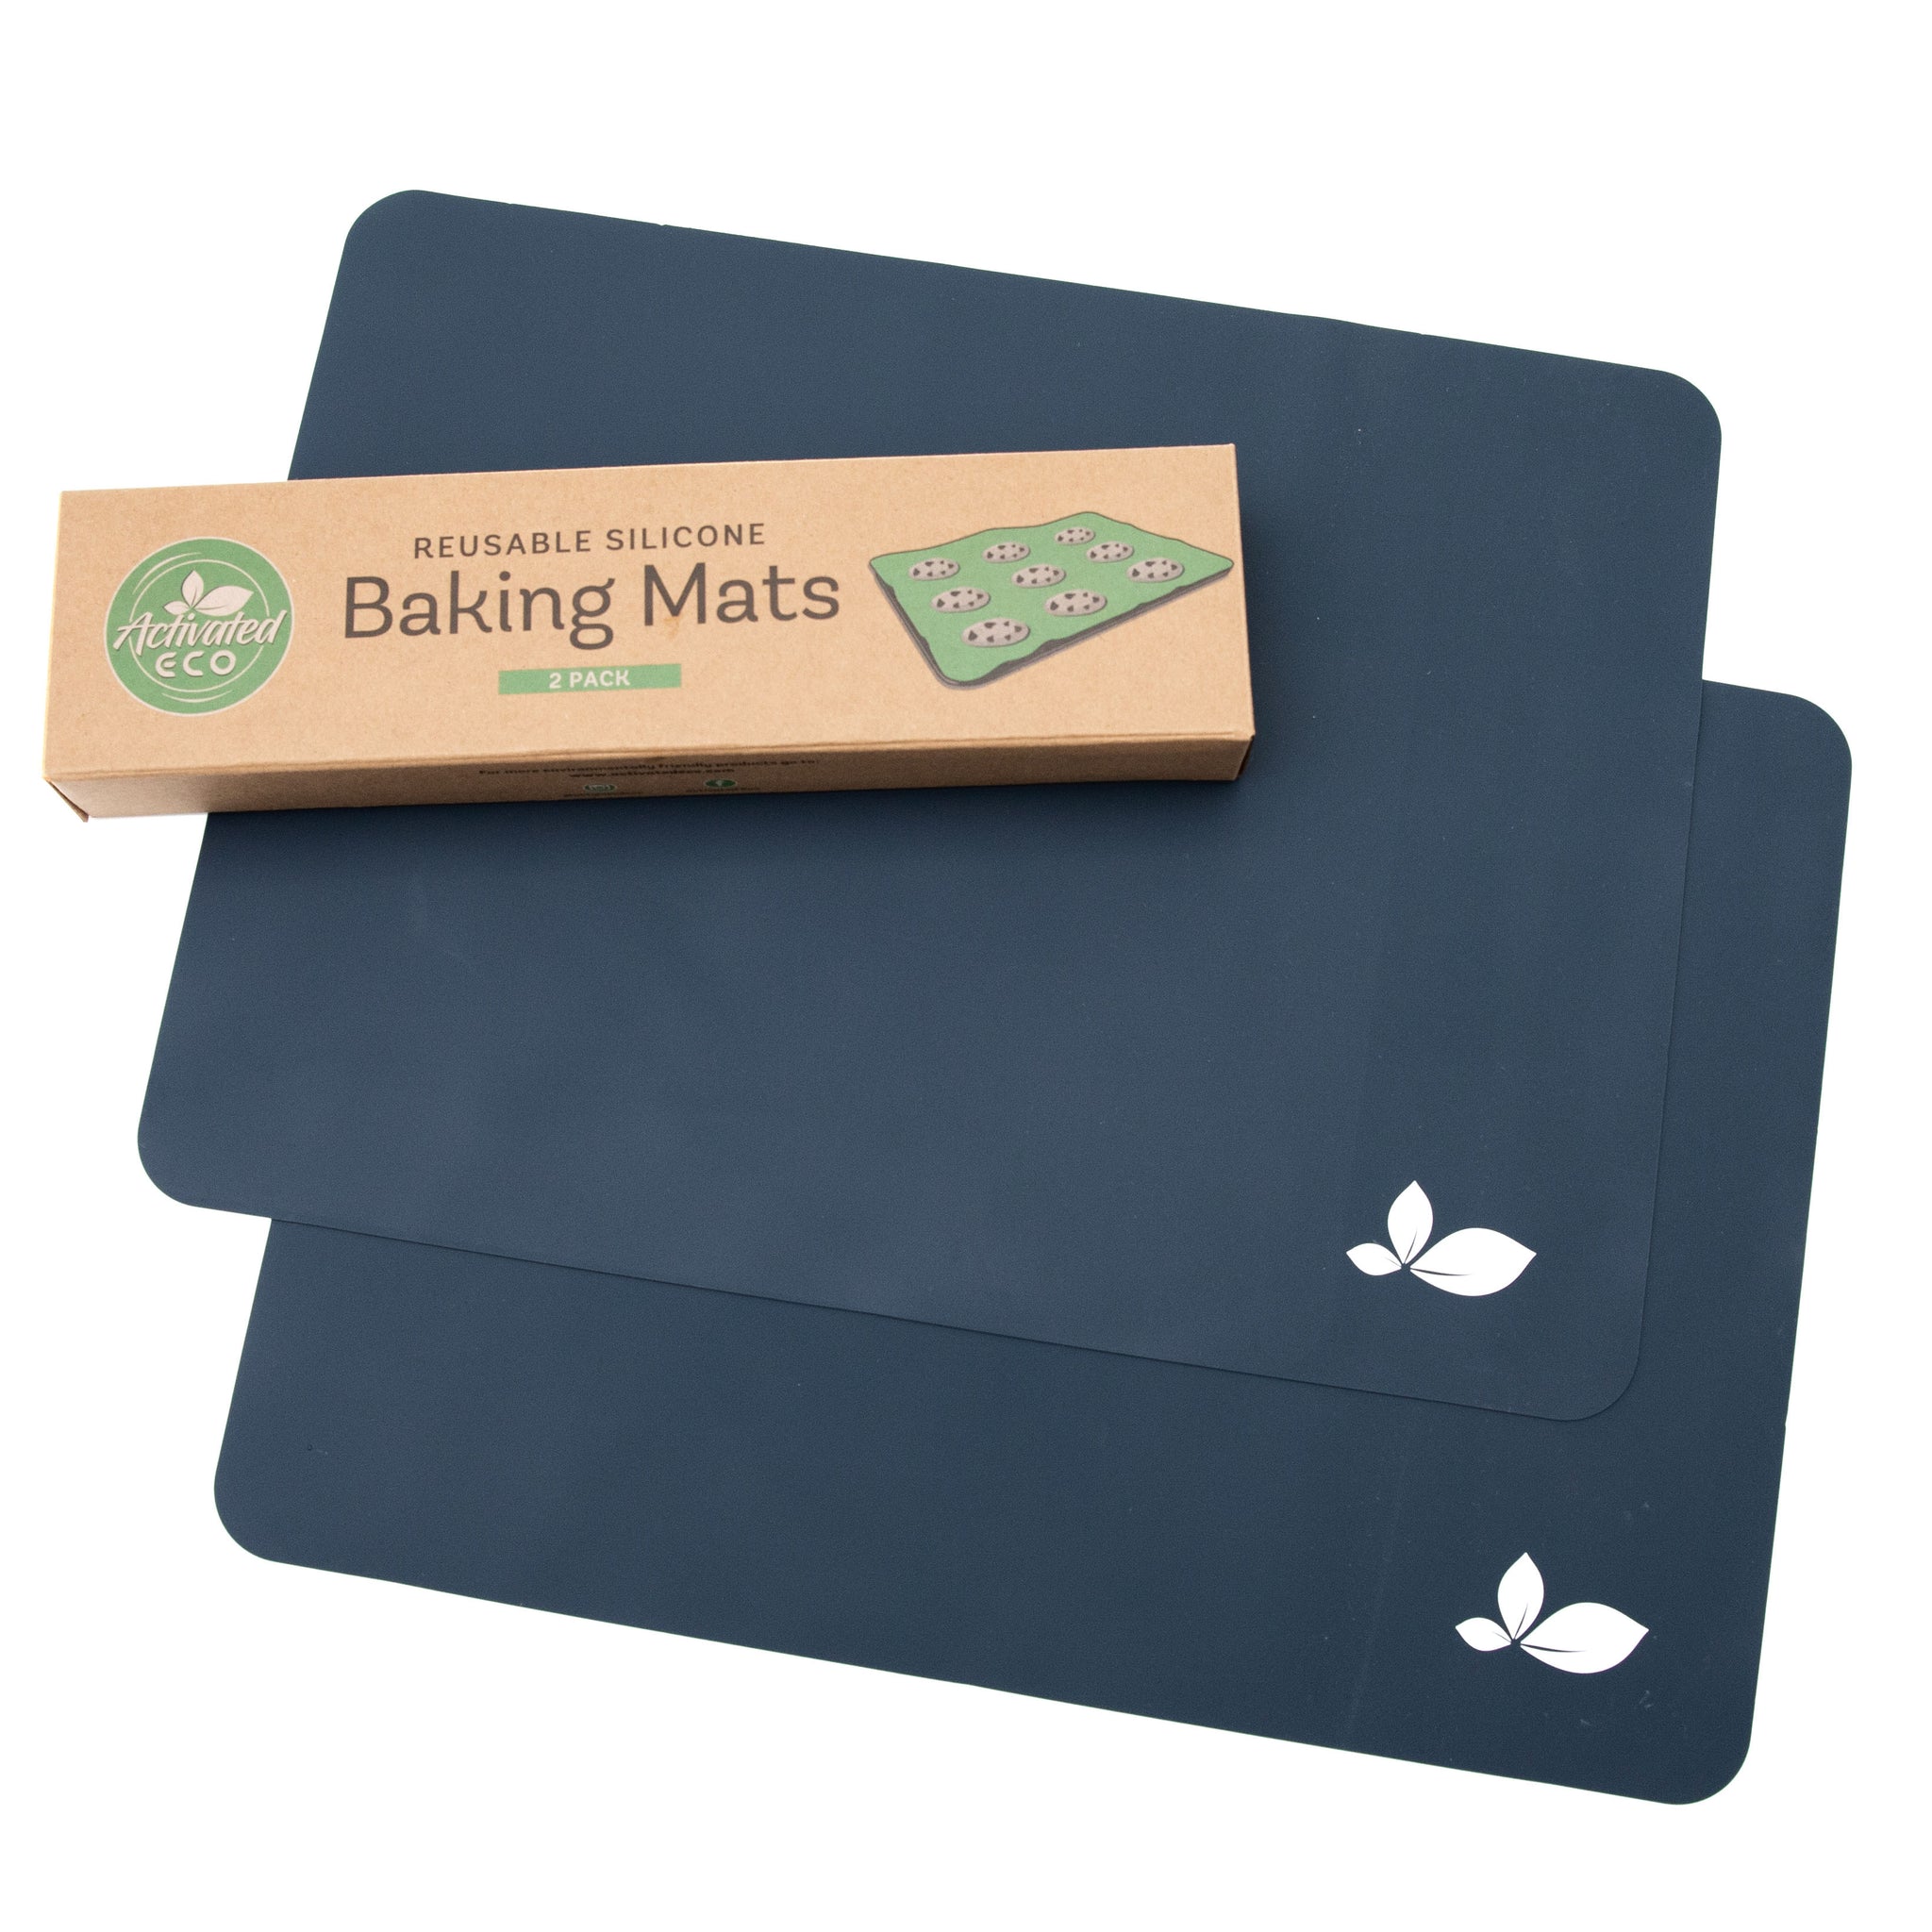 Are Silicone Baking Mats Eco-Friendly? ⋆ Zero Waste or Greenwashing?